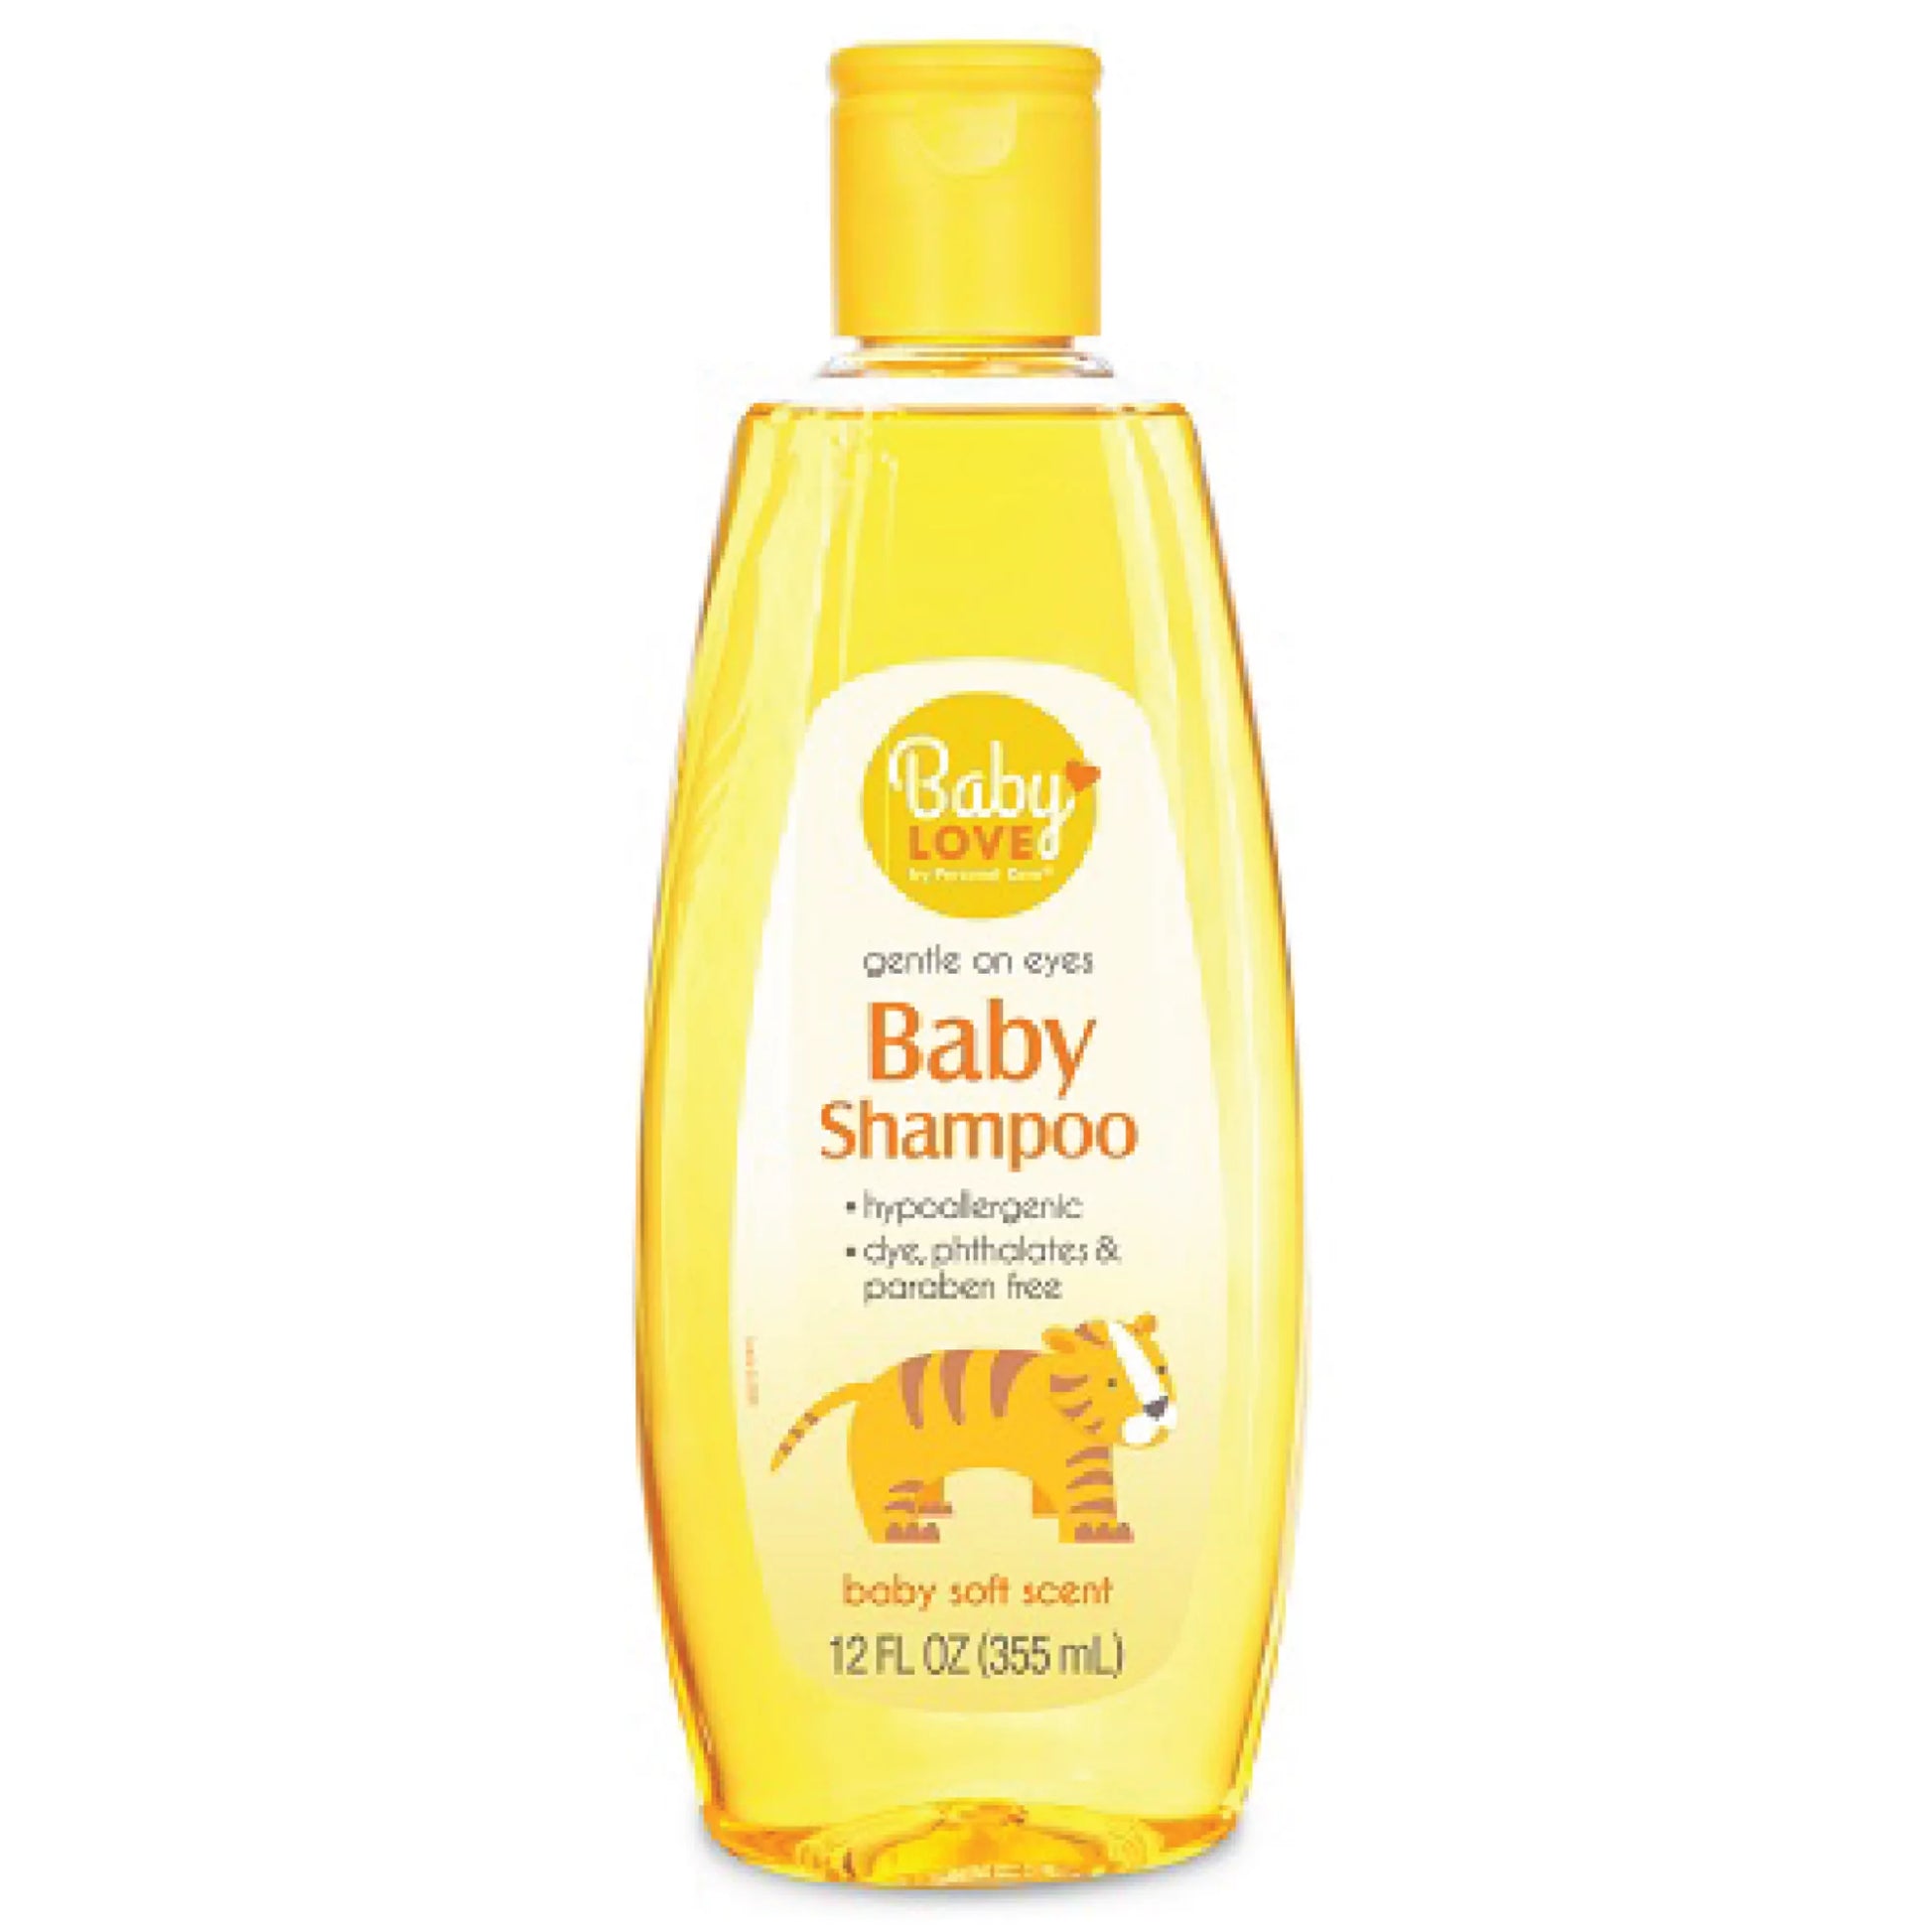 Baby Love Baby Shampoo 12oz 12 Count